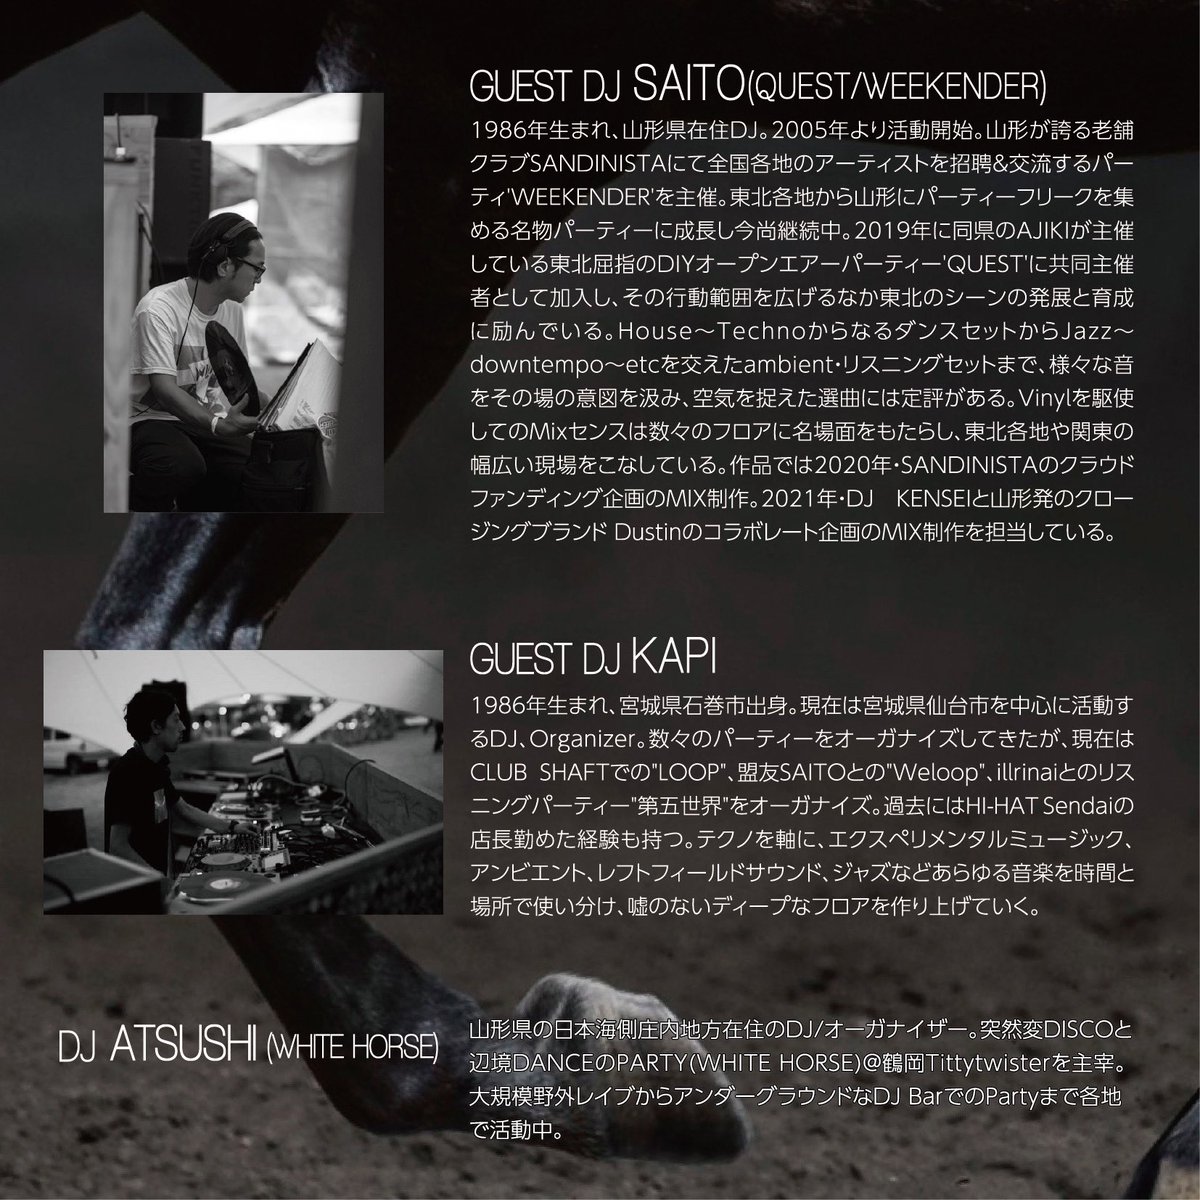 📣【BLACK HORSE~The Double Trouble~】24/5/17

OPEN 21:00-27:00
DOOR ¥1,900+600(1D)

GUEST DJ
SAITO (QUEST/WEEKENDER)
KAPI (∞)

DJ
ATSUSHI (WHITE HORSE)
CHUBACHI

Coffee 深夜エスプレッソ
and more...⁈

TIMETABLE
21:00  BlackHorse B2B
23:00  Saito Kapi B2B
26:00  All B2B